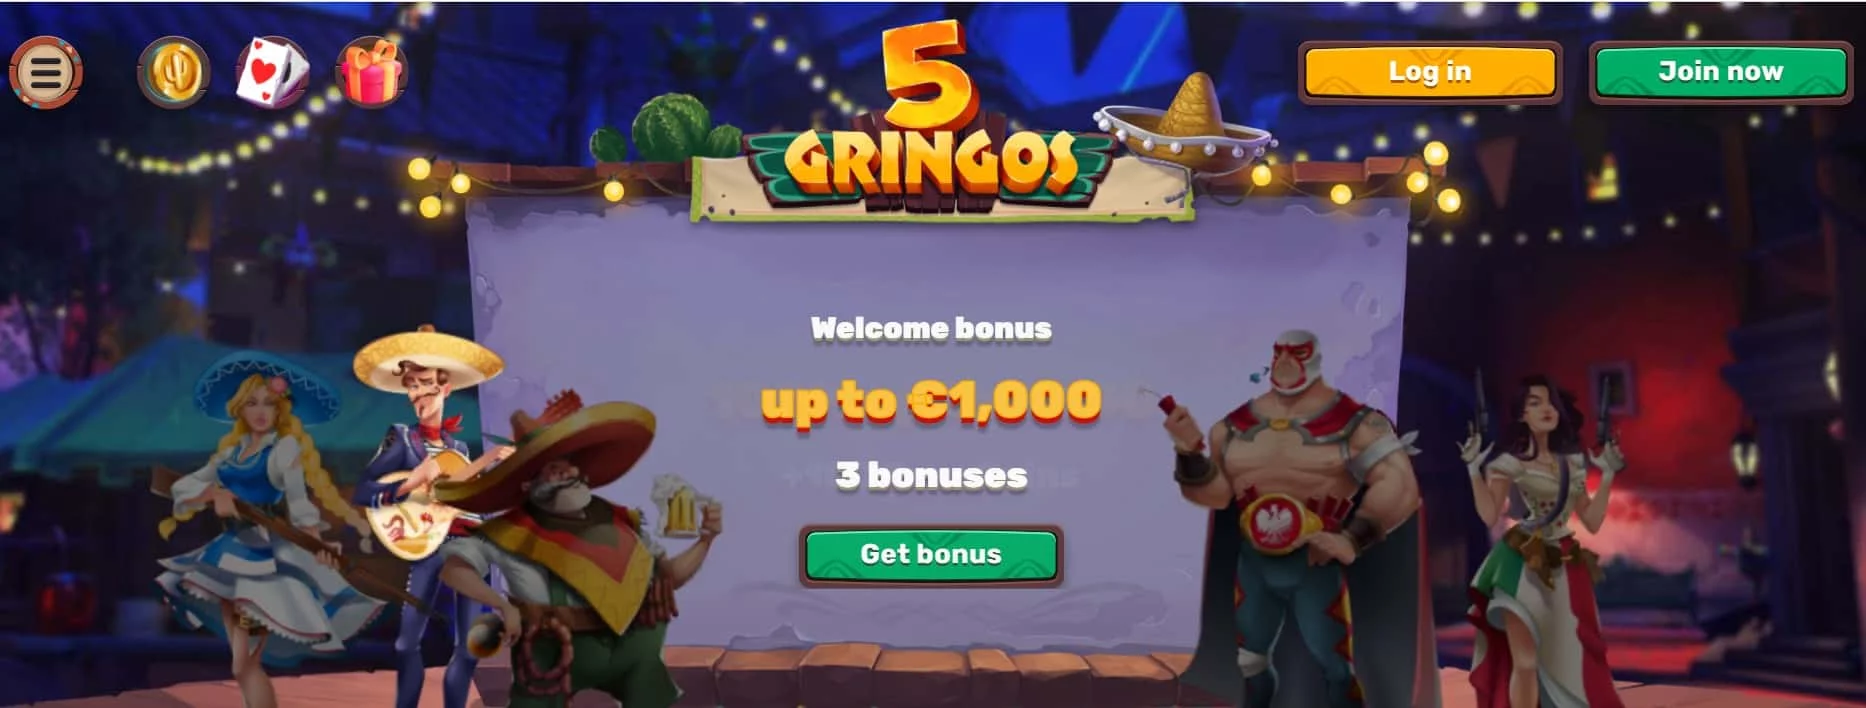 5gringos casino welcome bonus-min